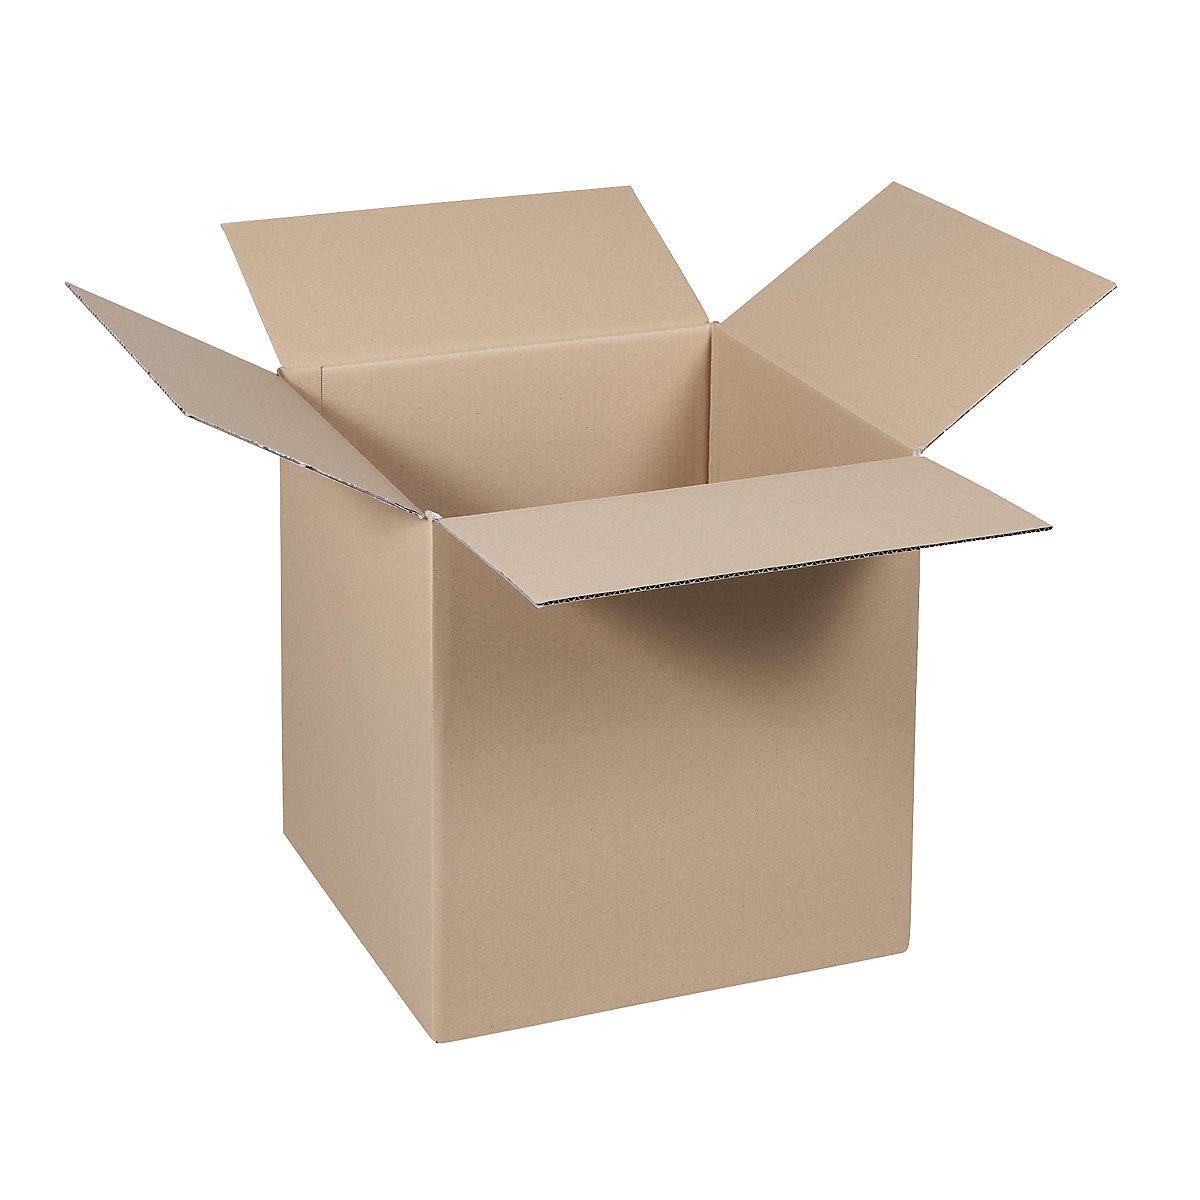 Folding cardboard box, FEFCO 0201, made of single fluted cardboard, internal dimensions 400 x 400 x 400 mm, pack of 50-35